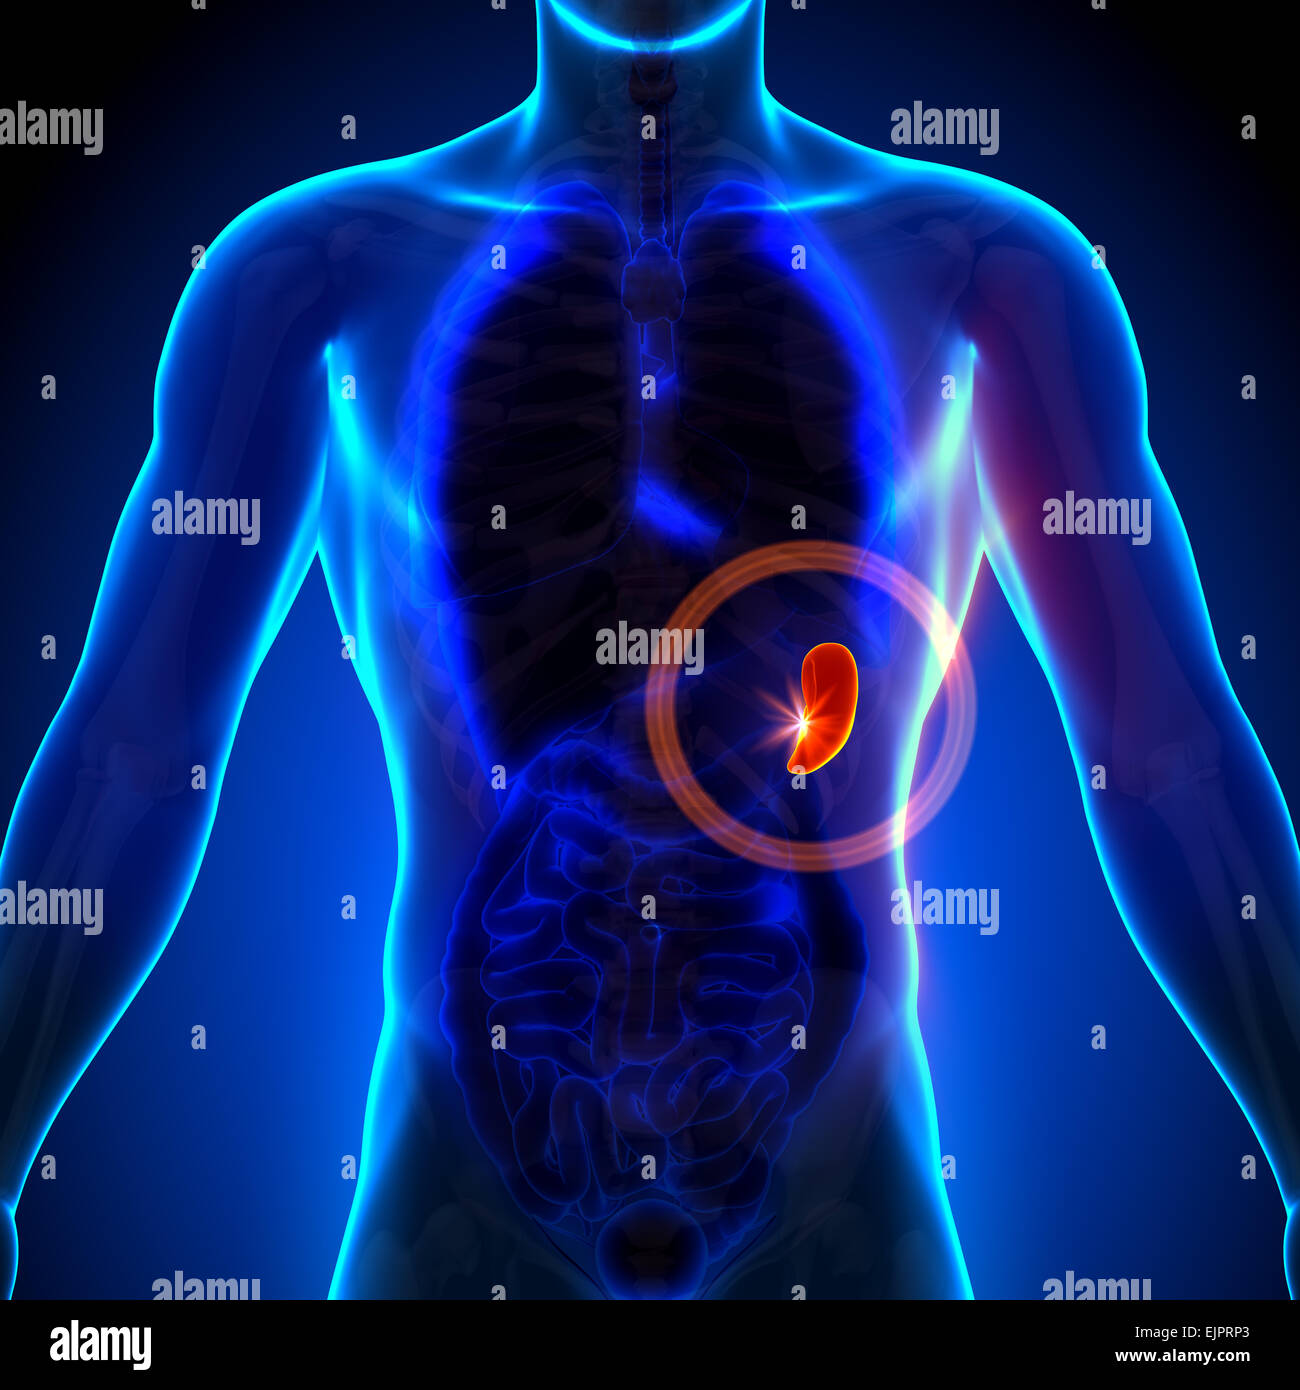 Spleen - Male anatomy of human organs - x-ray view Stock Photo - Alamy